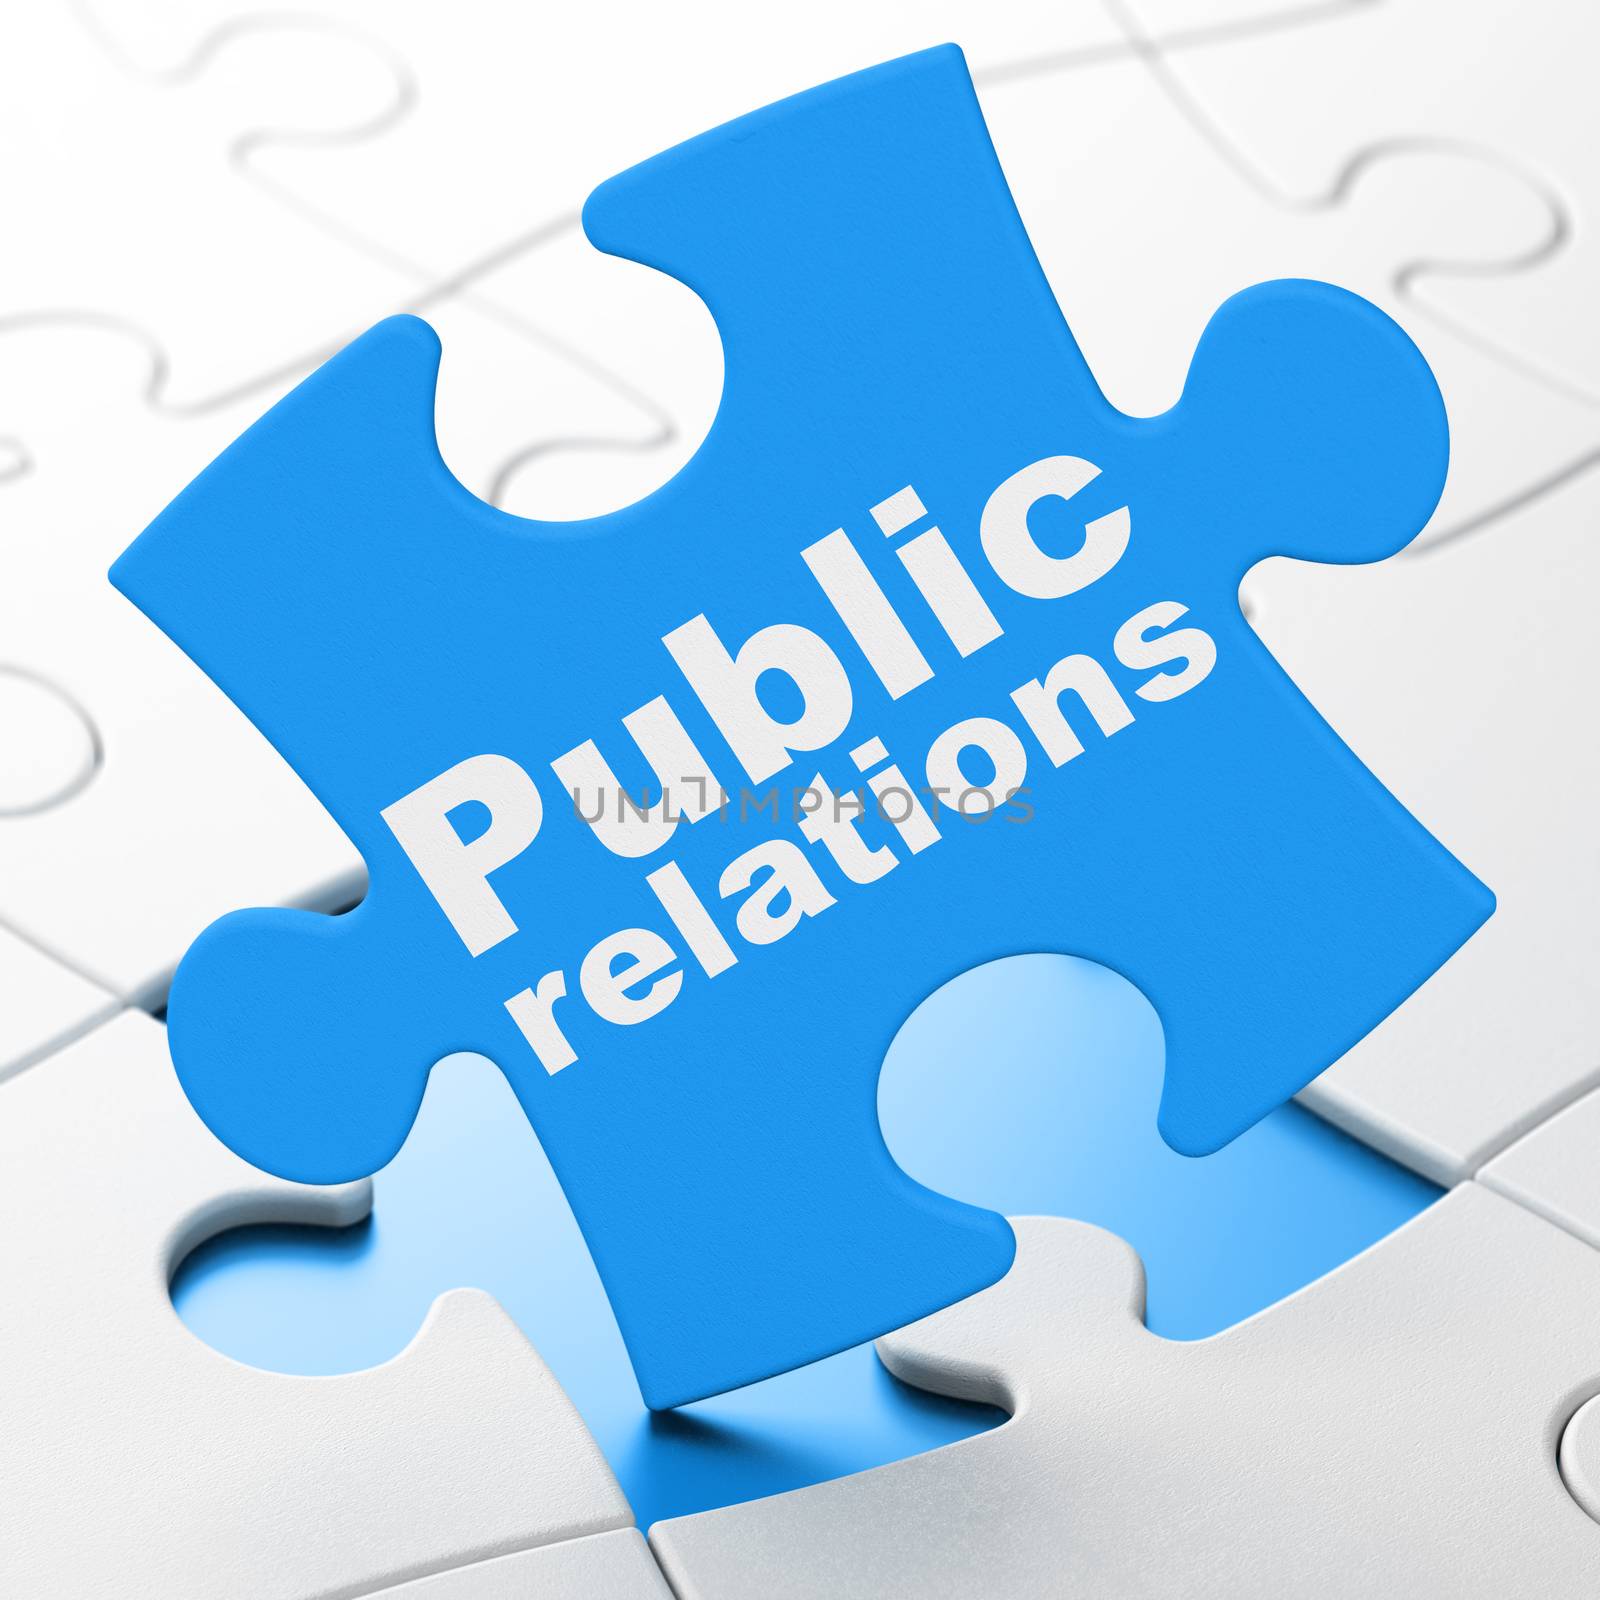 Marketing concept: Public Relations on Blue puzzle pieces background, 3D rendering